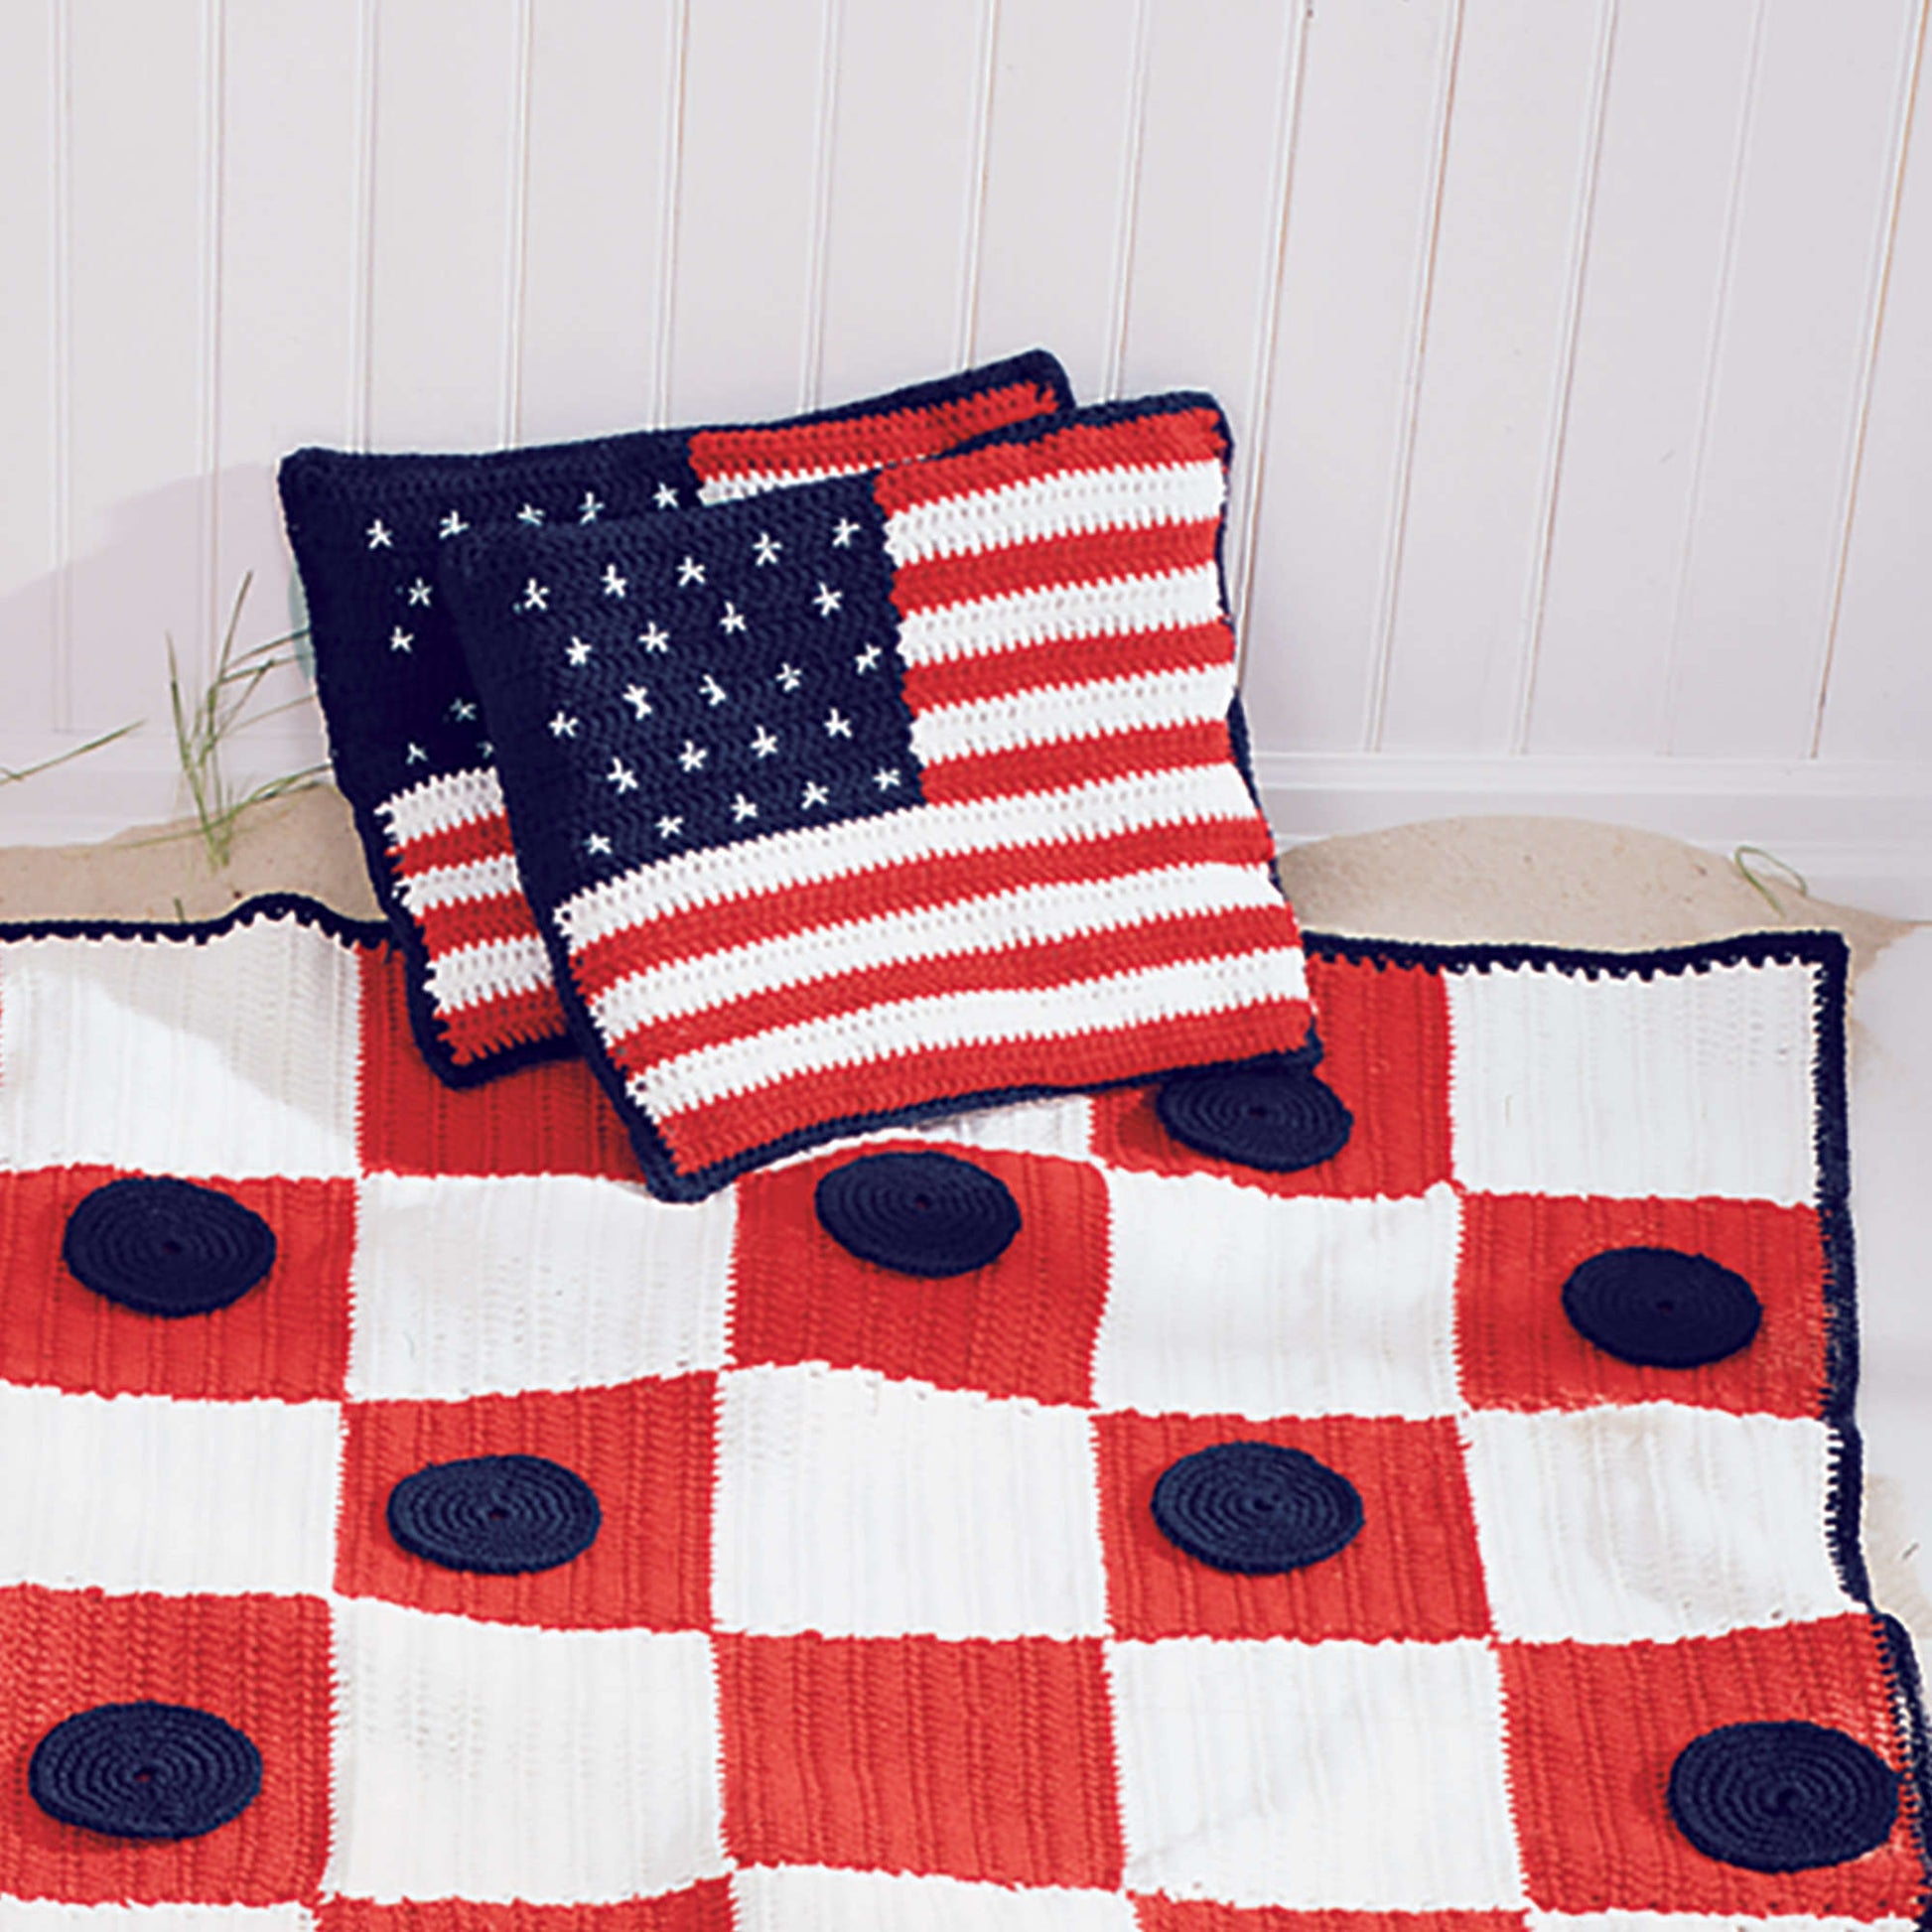 Free Lily Sugar'n Cream Stars and Stripes Cushions Crochet Pattern